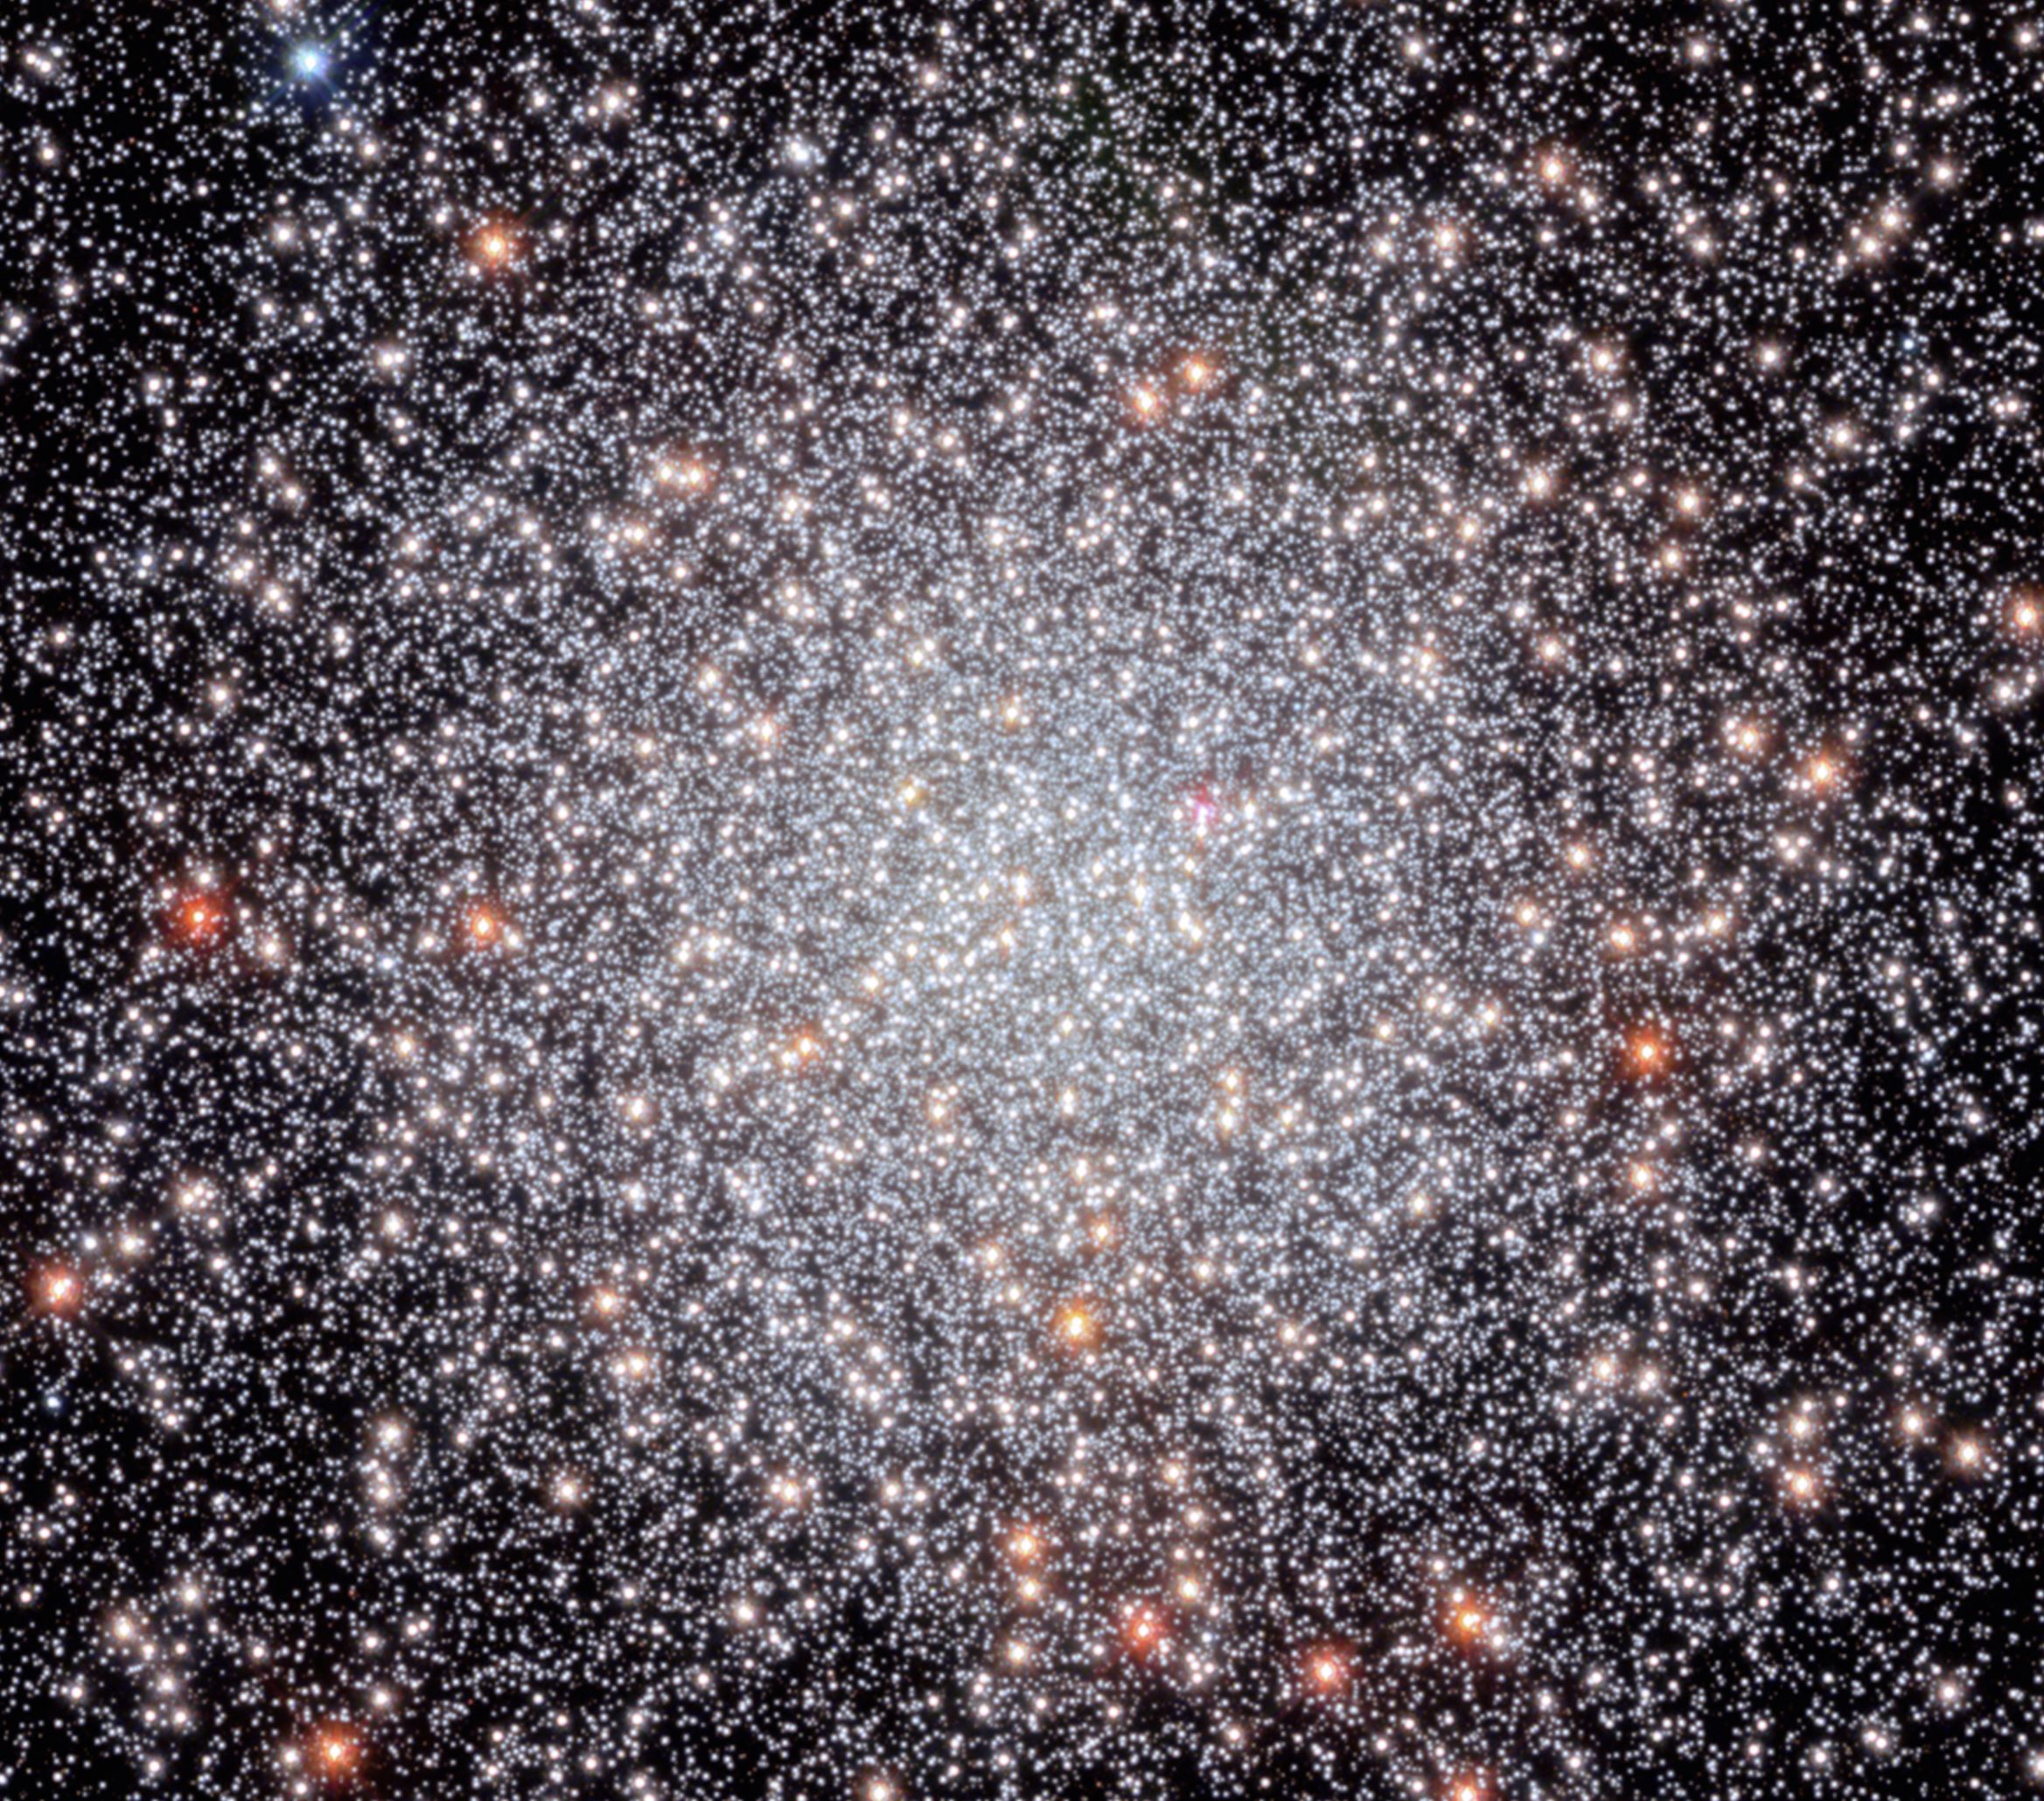 A cropped view of the center of Globular Cluster NGC 6440. Image credit: NASA, ESA, C. Pallanca and F. Ferraro (Universits Di Bologna), and M. van Kerkwijk (University of Toronto); Processing: G. Kober (NASA/Catholic University of America).